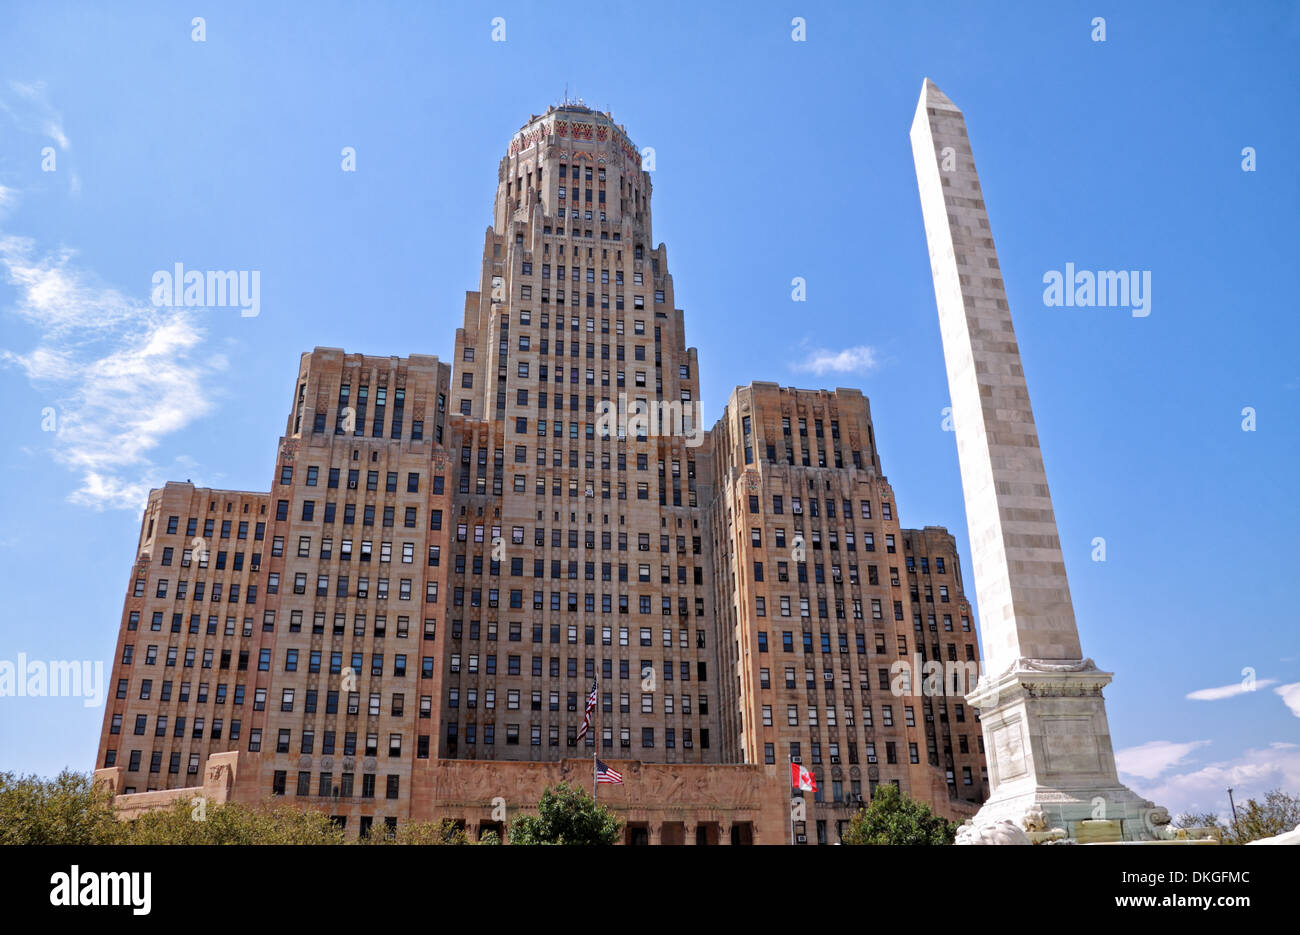 Buffalo City Hall High Resolution Stock Photography and Images - Alamy